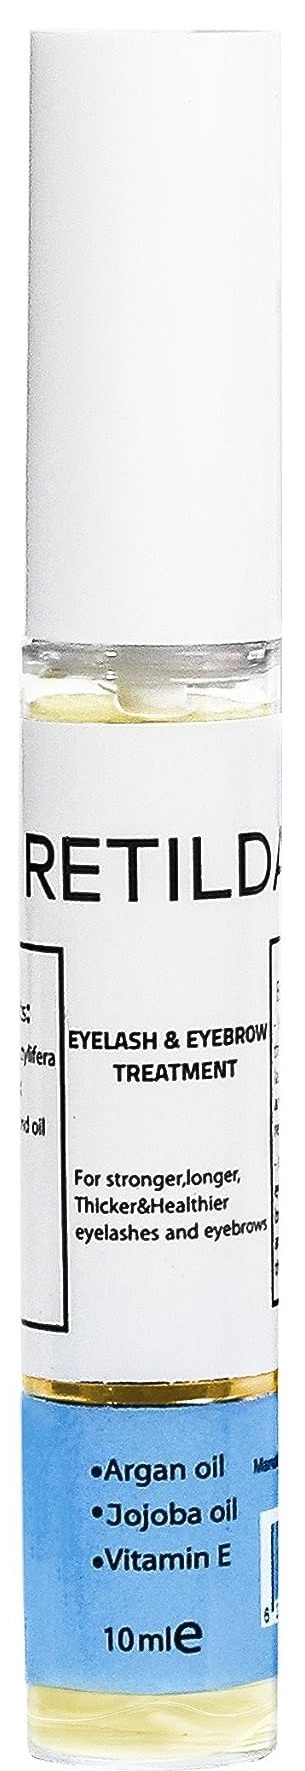 Retilda Eyelash And Eyebrow Treatment